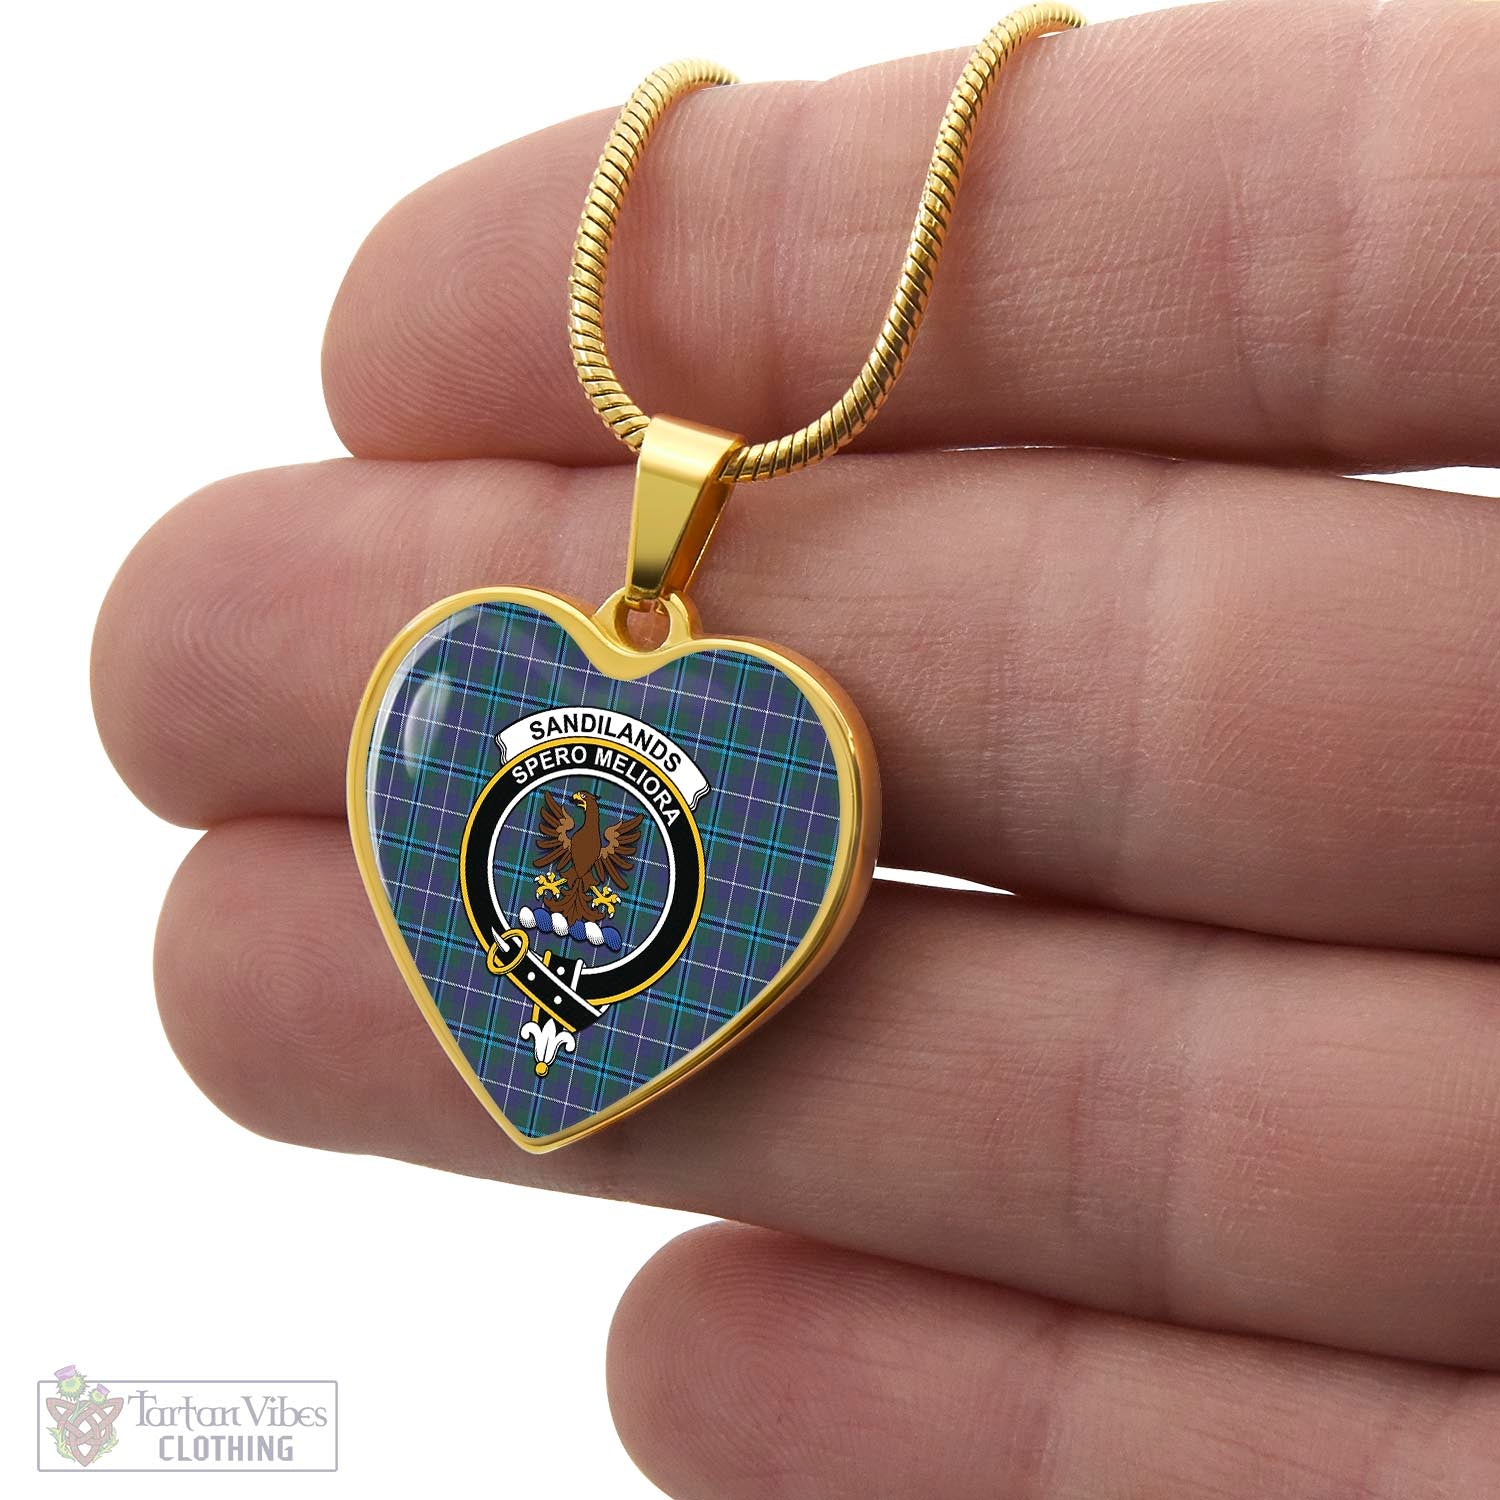 Tartan Vibes Clothing Sandilands Tartan Heart Necklace with Family Crest